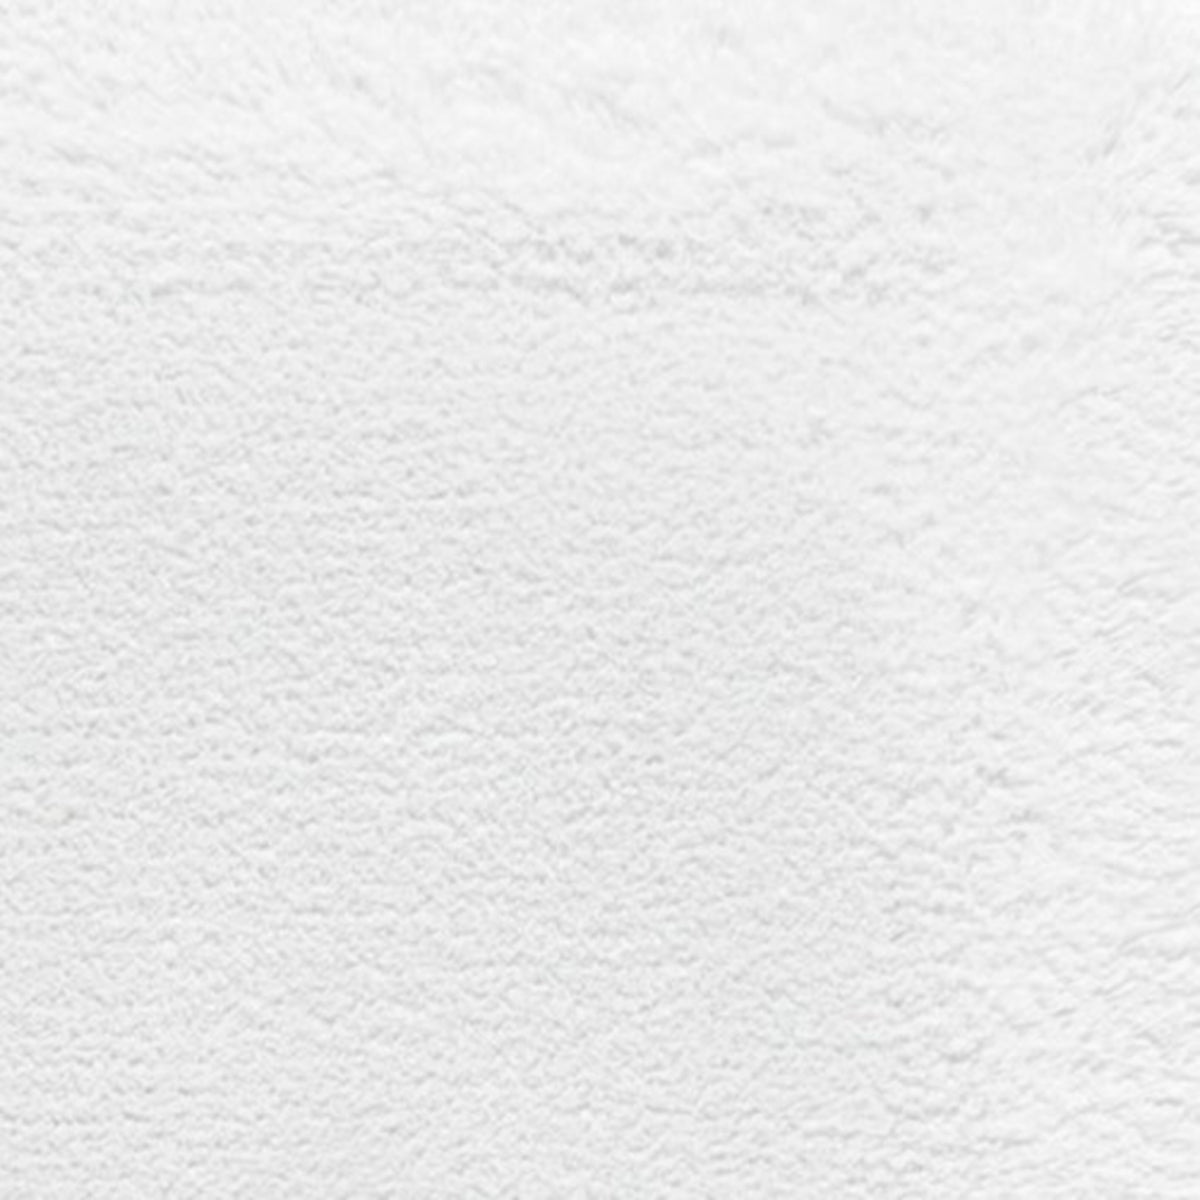 Swatch Sample of Graccioza Grand Egoist Bath Rug in White Color